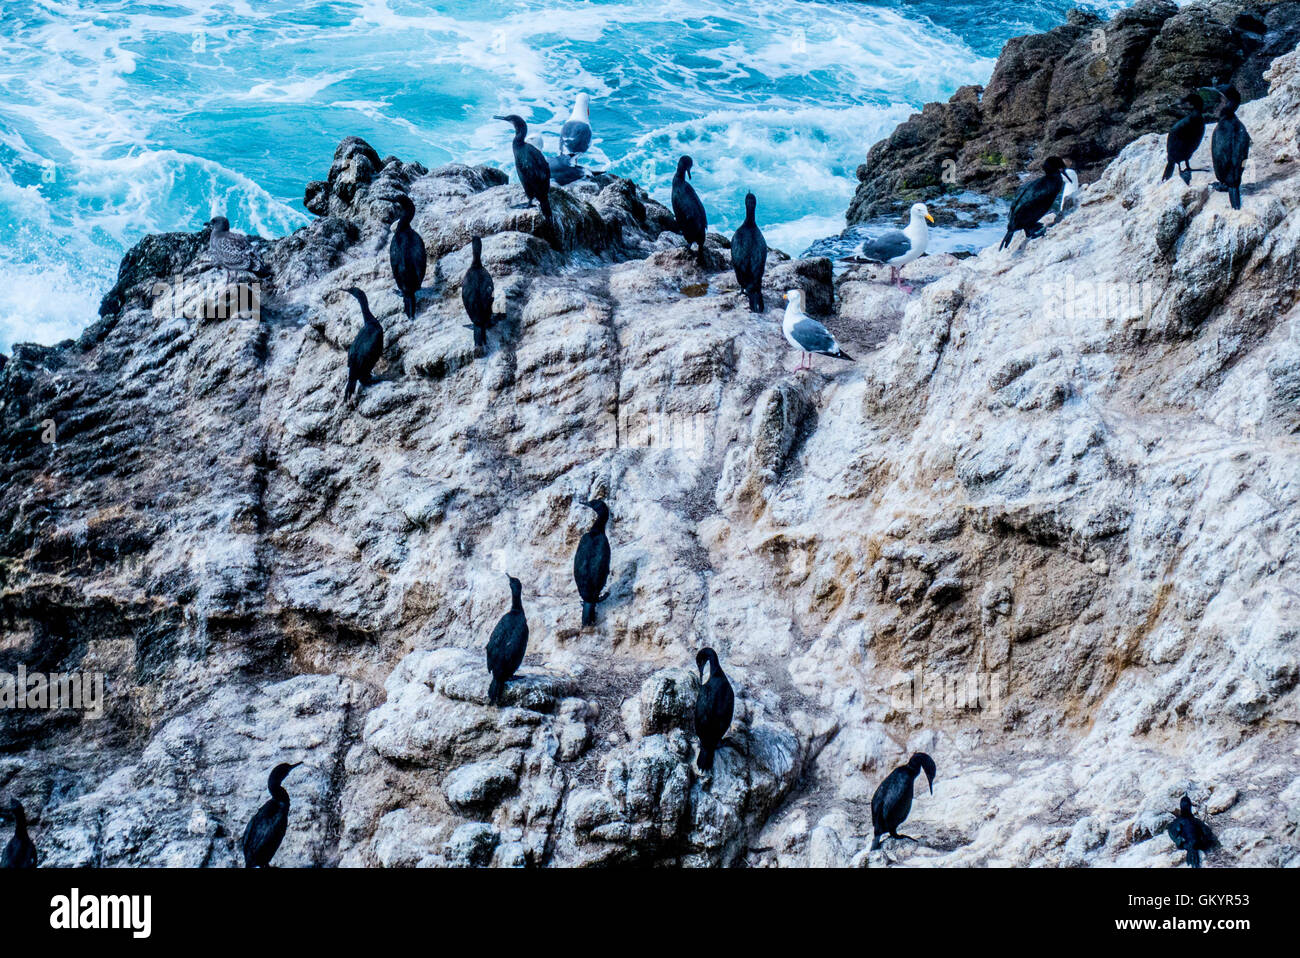 Bodega Bay,California crashing waves and shore birds Stock Photo